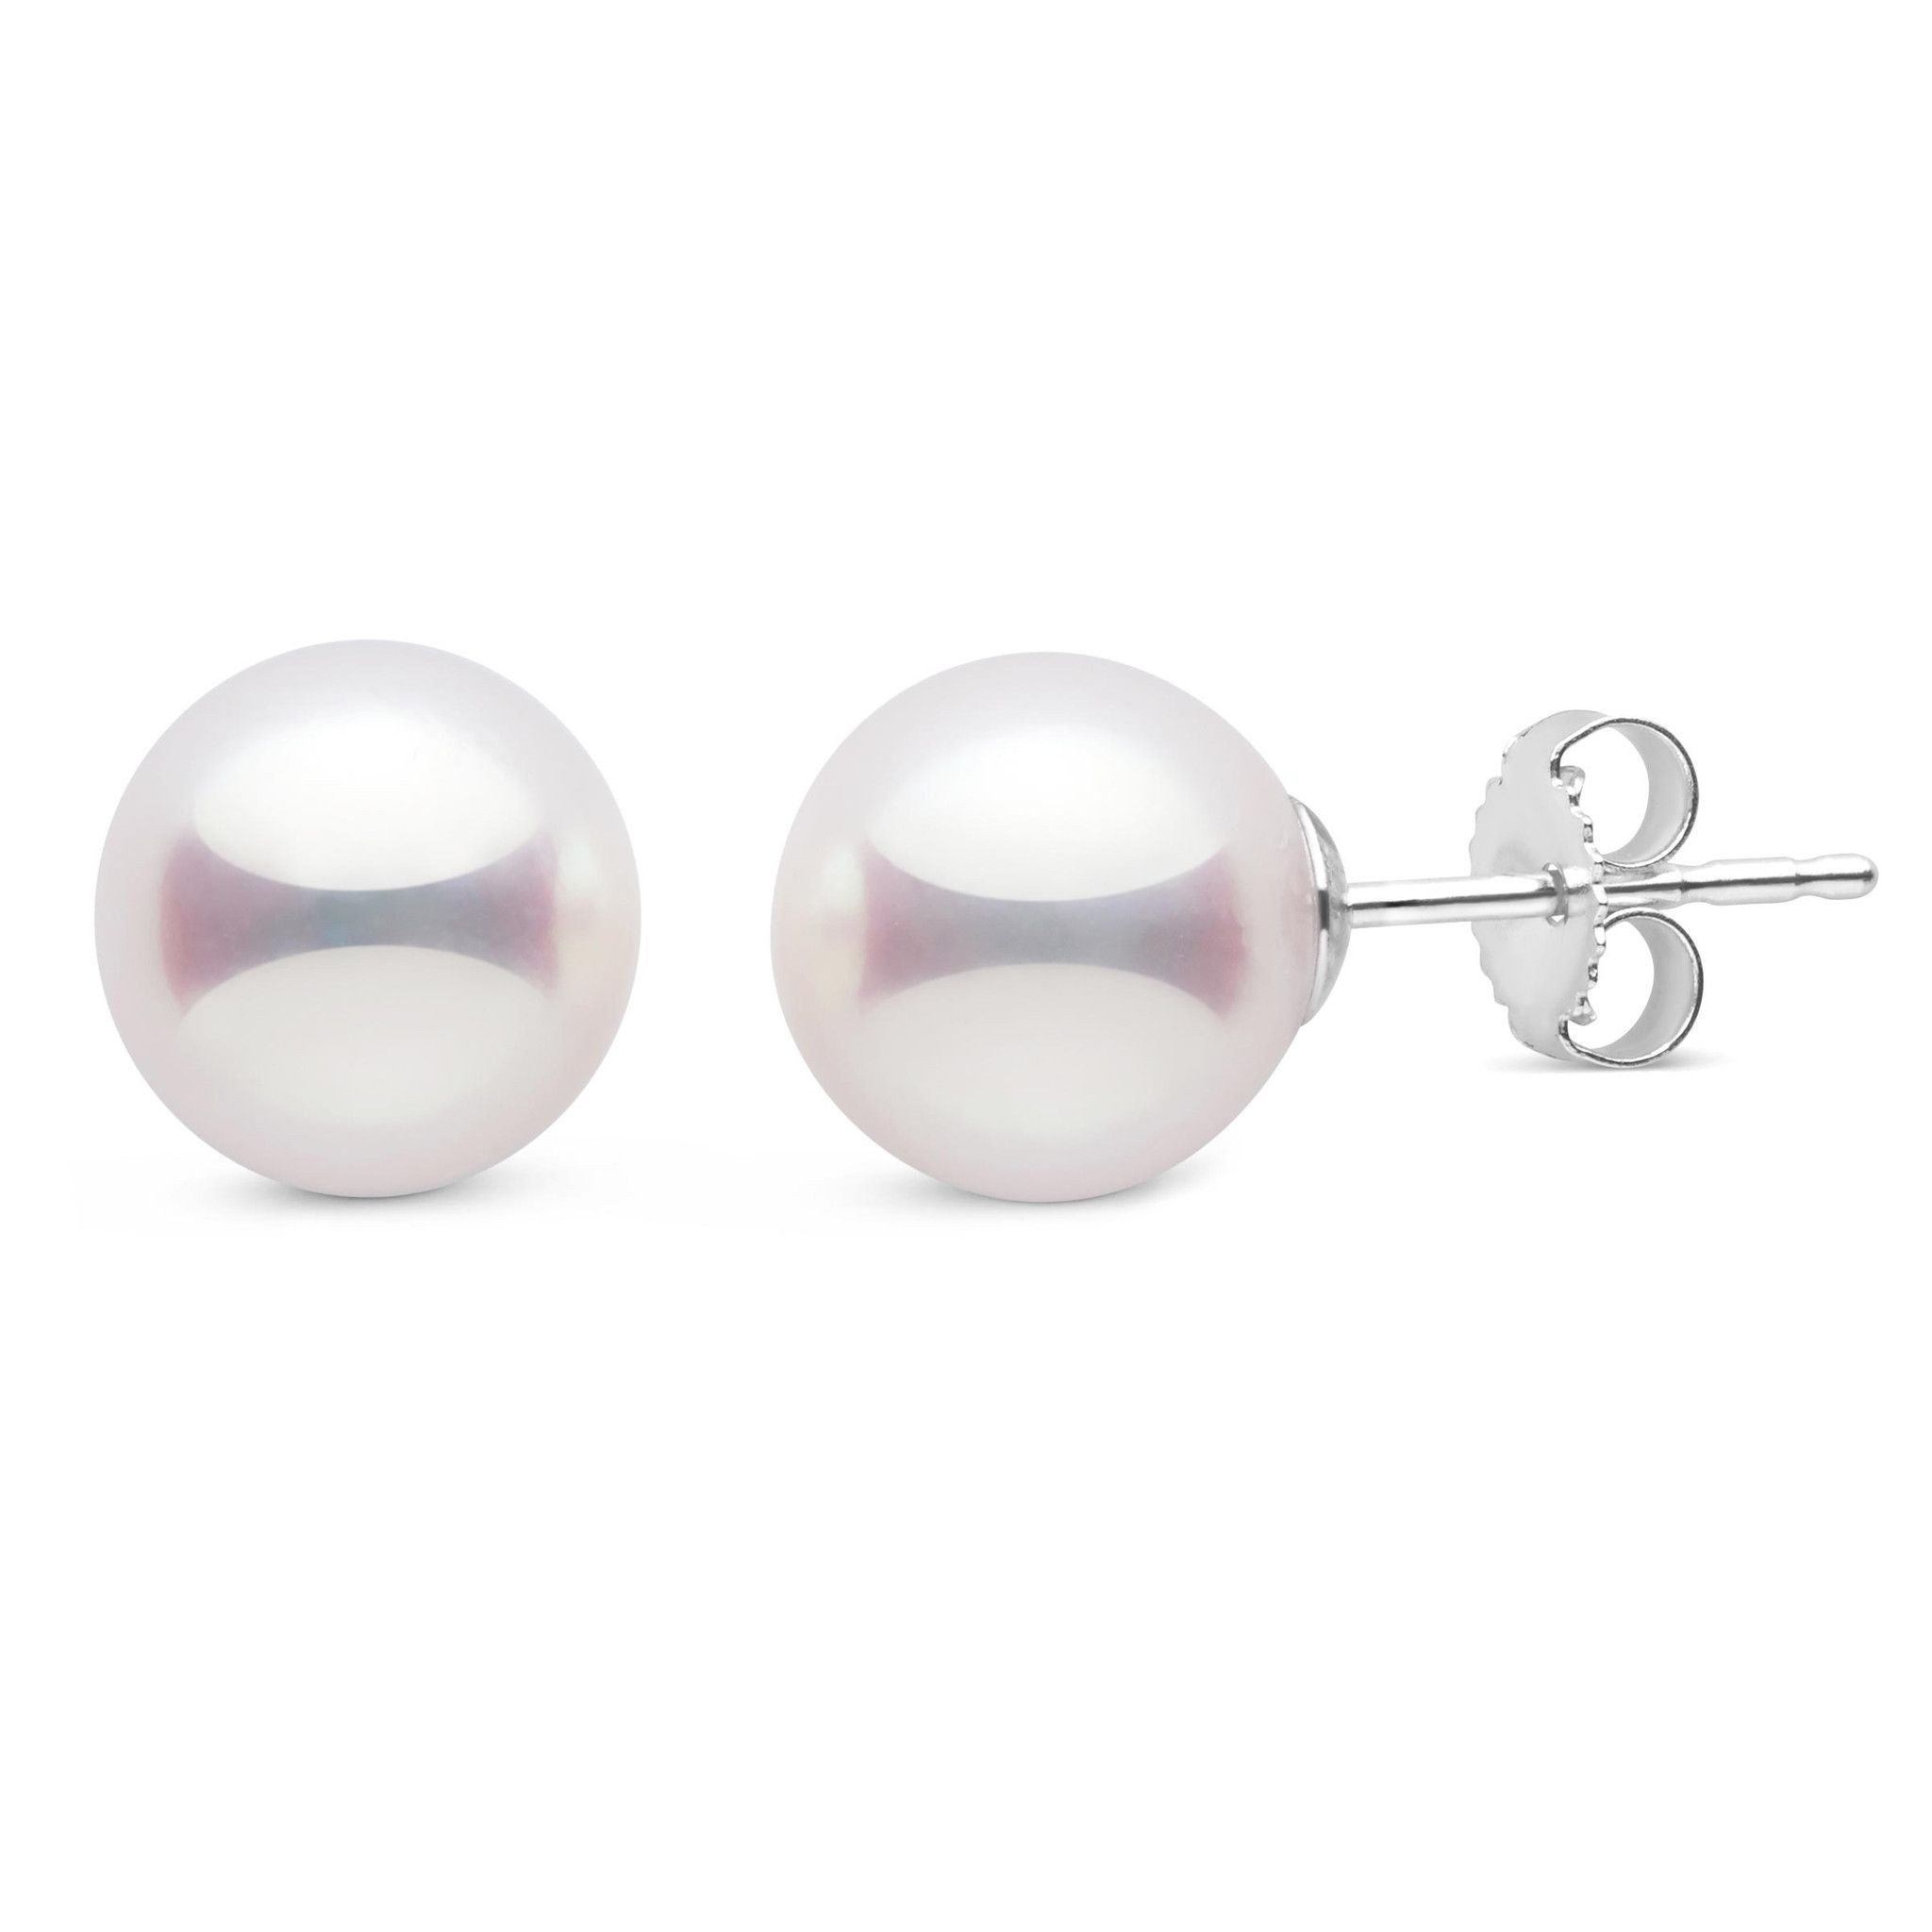 8.5-9.0 mm White Hanadama Pearl Stud Earrings on white gold